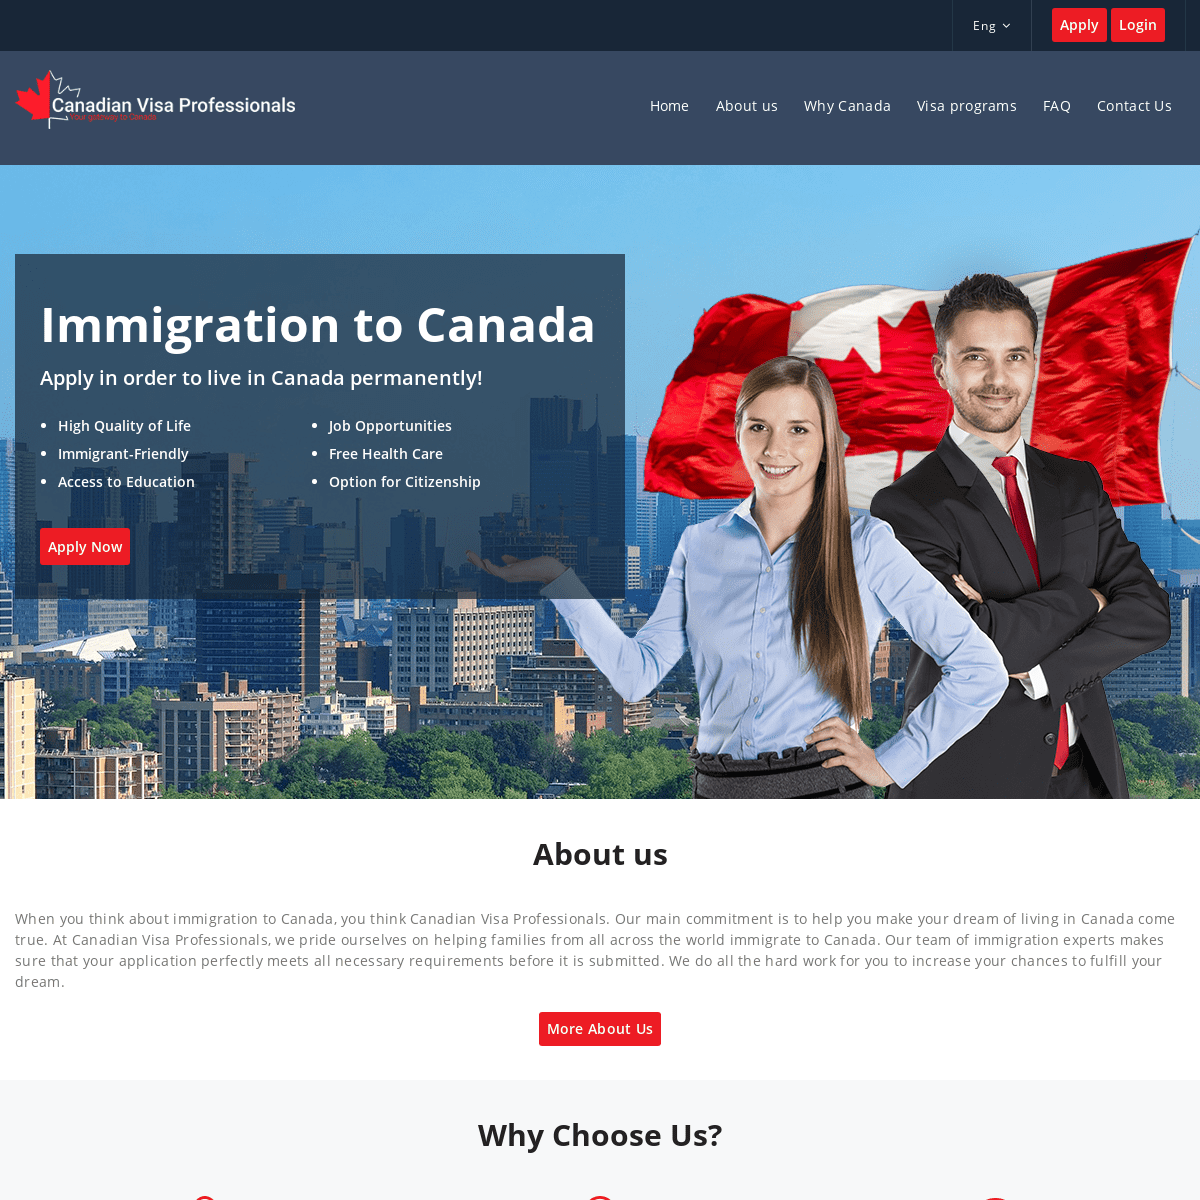 Canadian Visa Professionals - Immigration to Canada